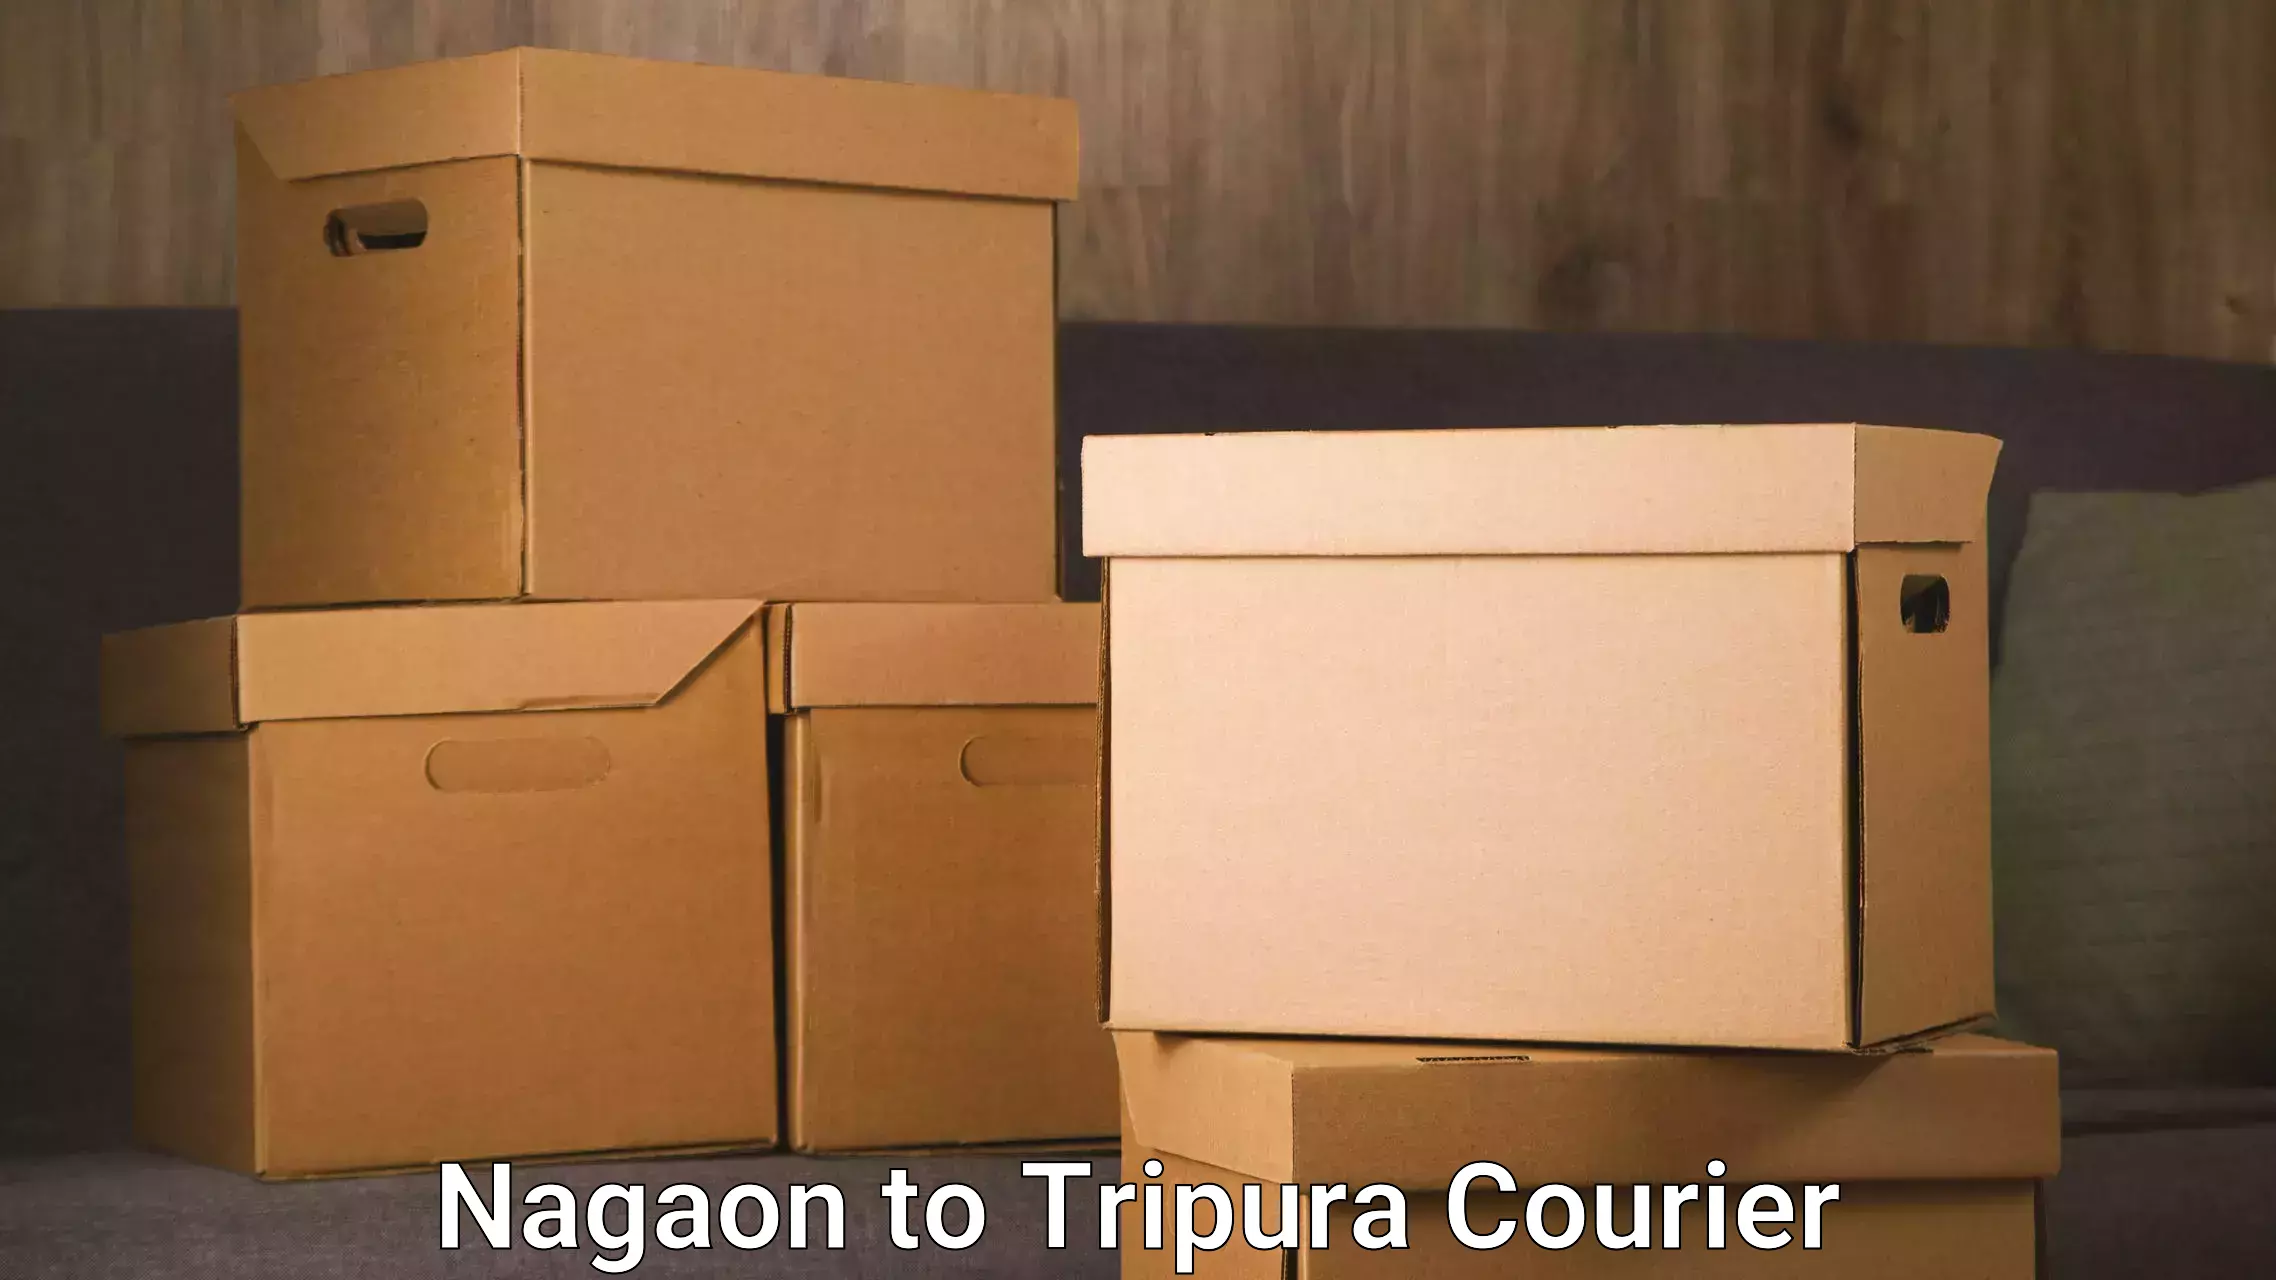 Reliable parcel services Nagaon to Agartala